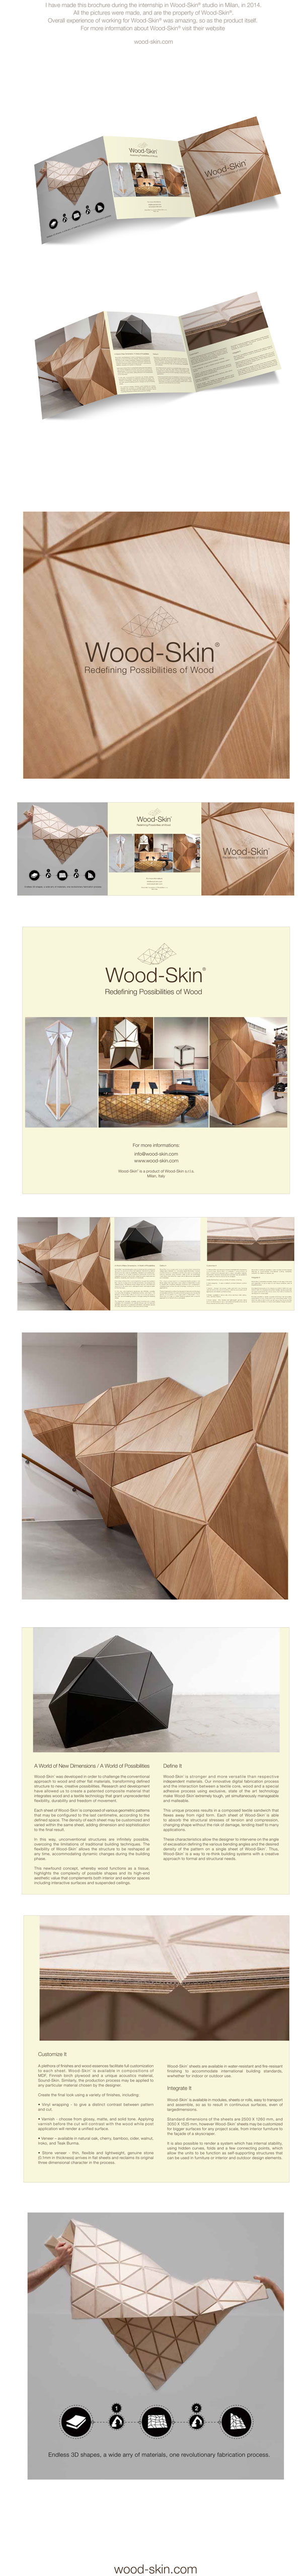 wood-skin brochure tri-fold